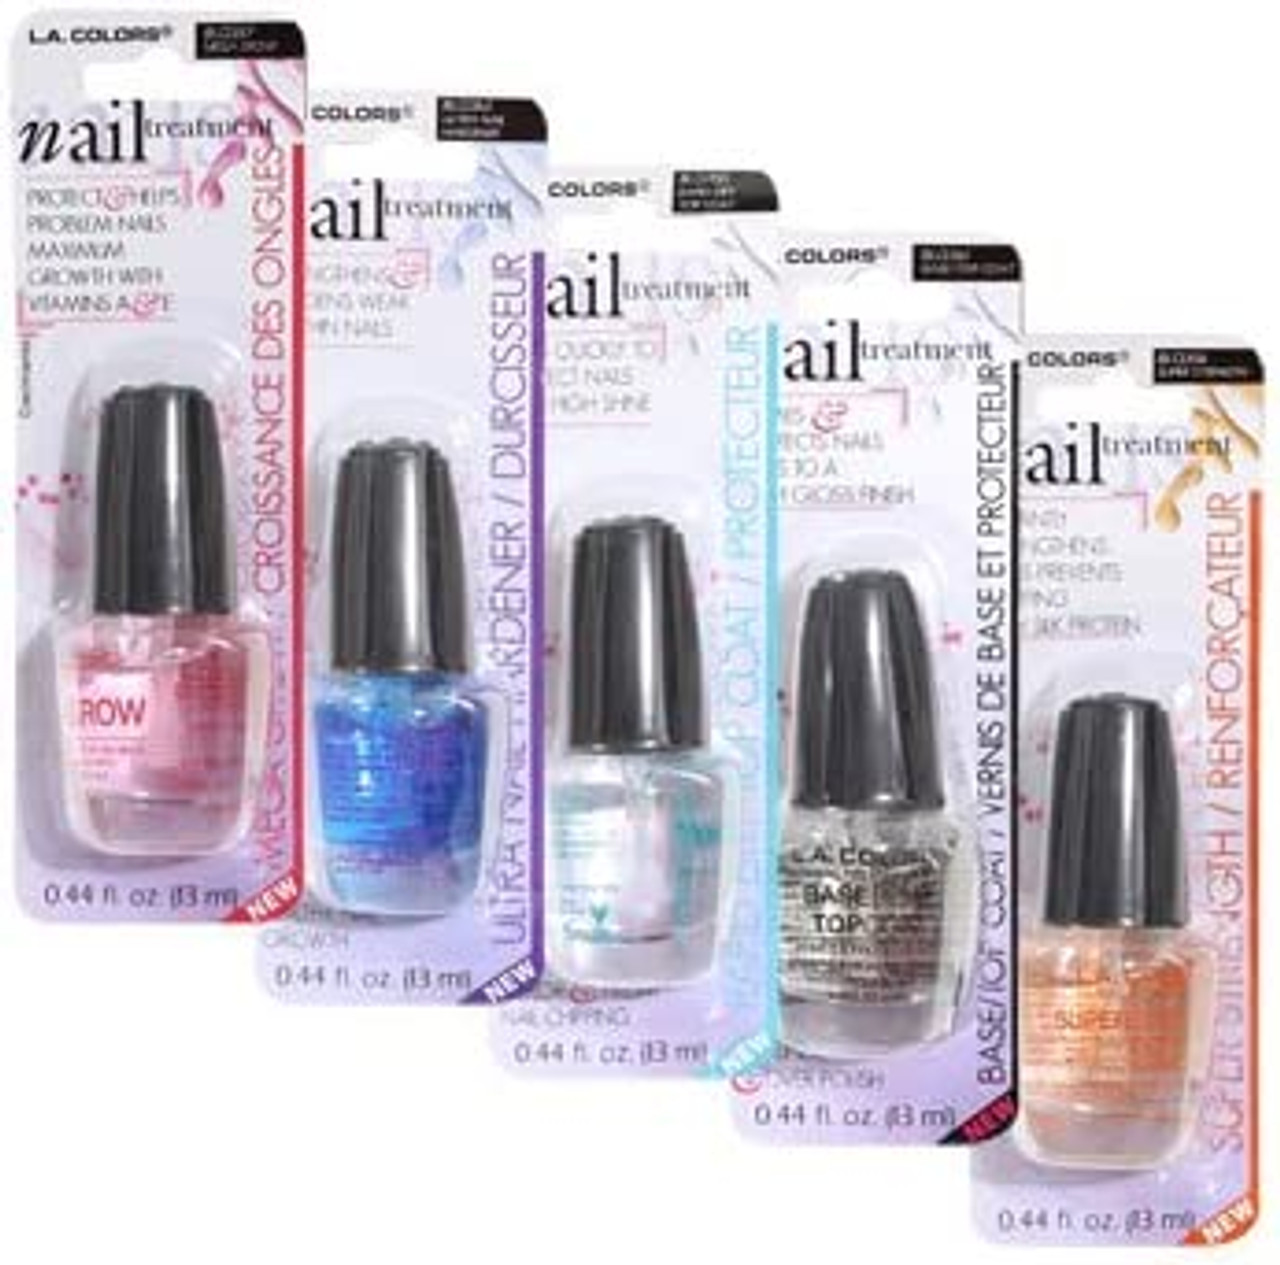 On My Nails: LA Colors Mint Nail Polish - myfindsonline.com